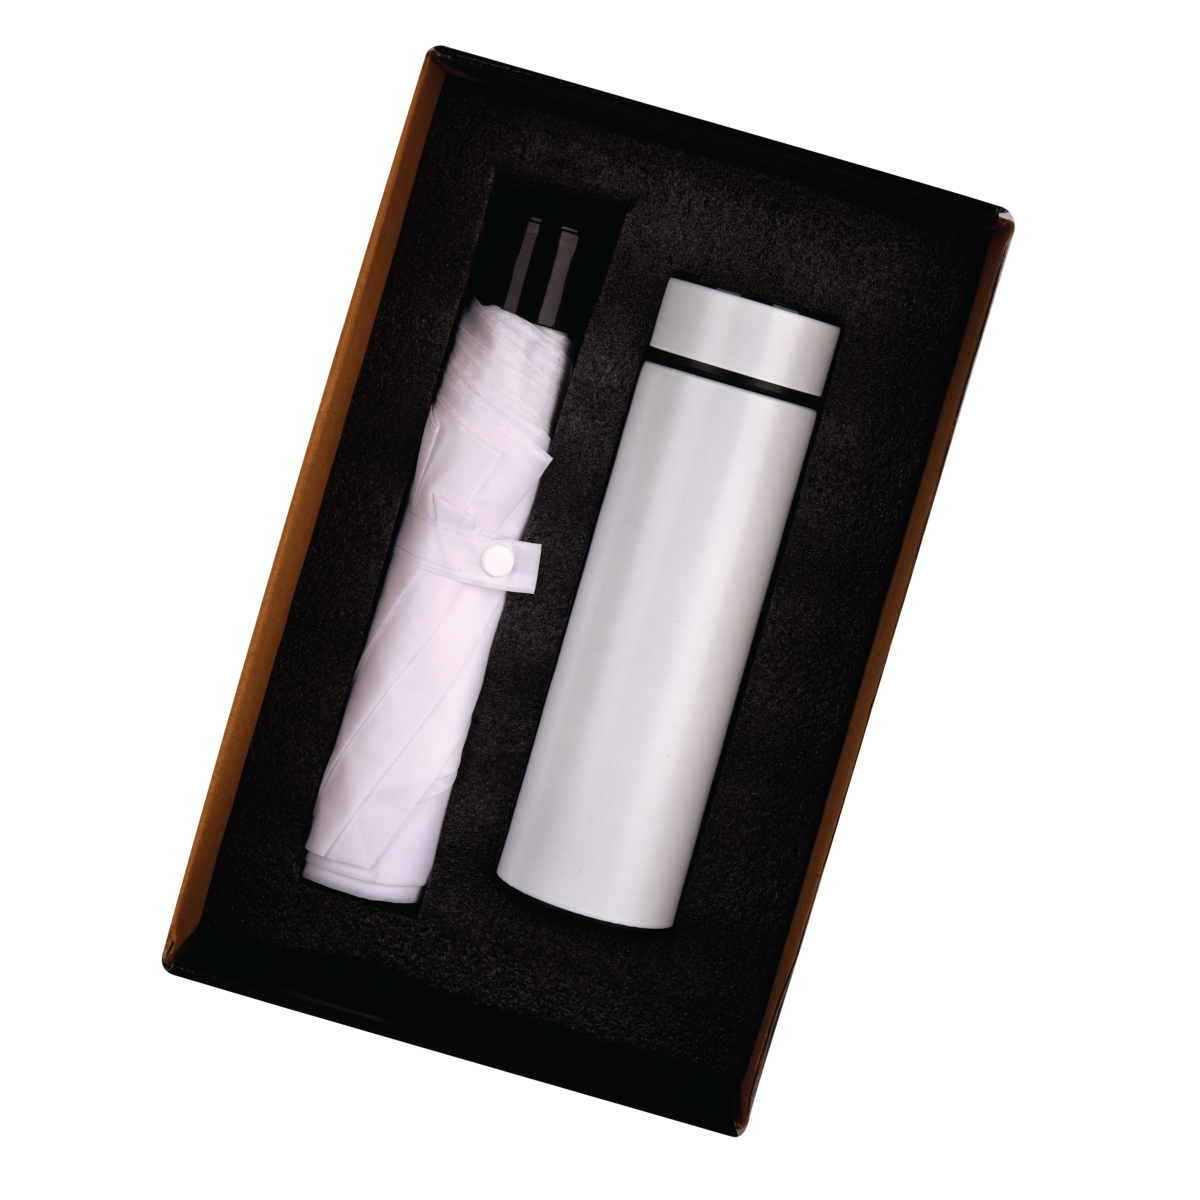 White 2in1 Umbrella and Bottle Gift Set - For Corporate Gifting, Employee Joining Kit, Dealer or Customer Monsoon Gifting HK23